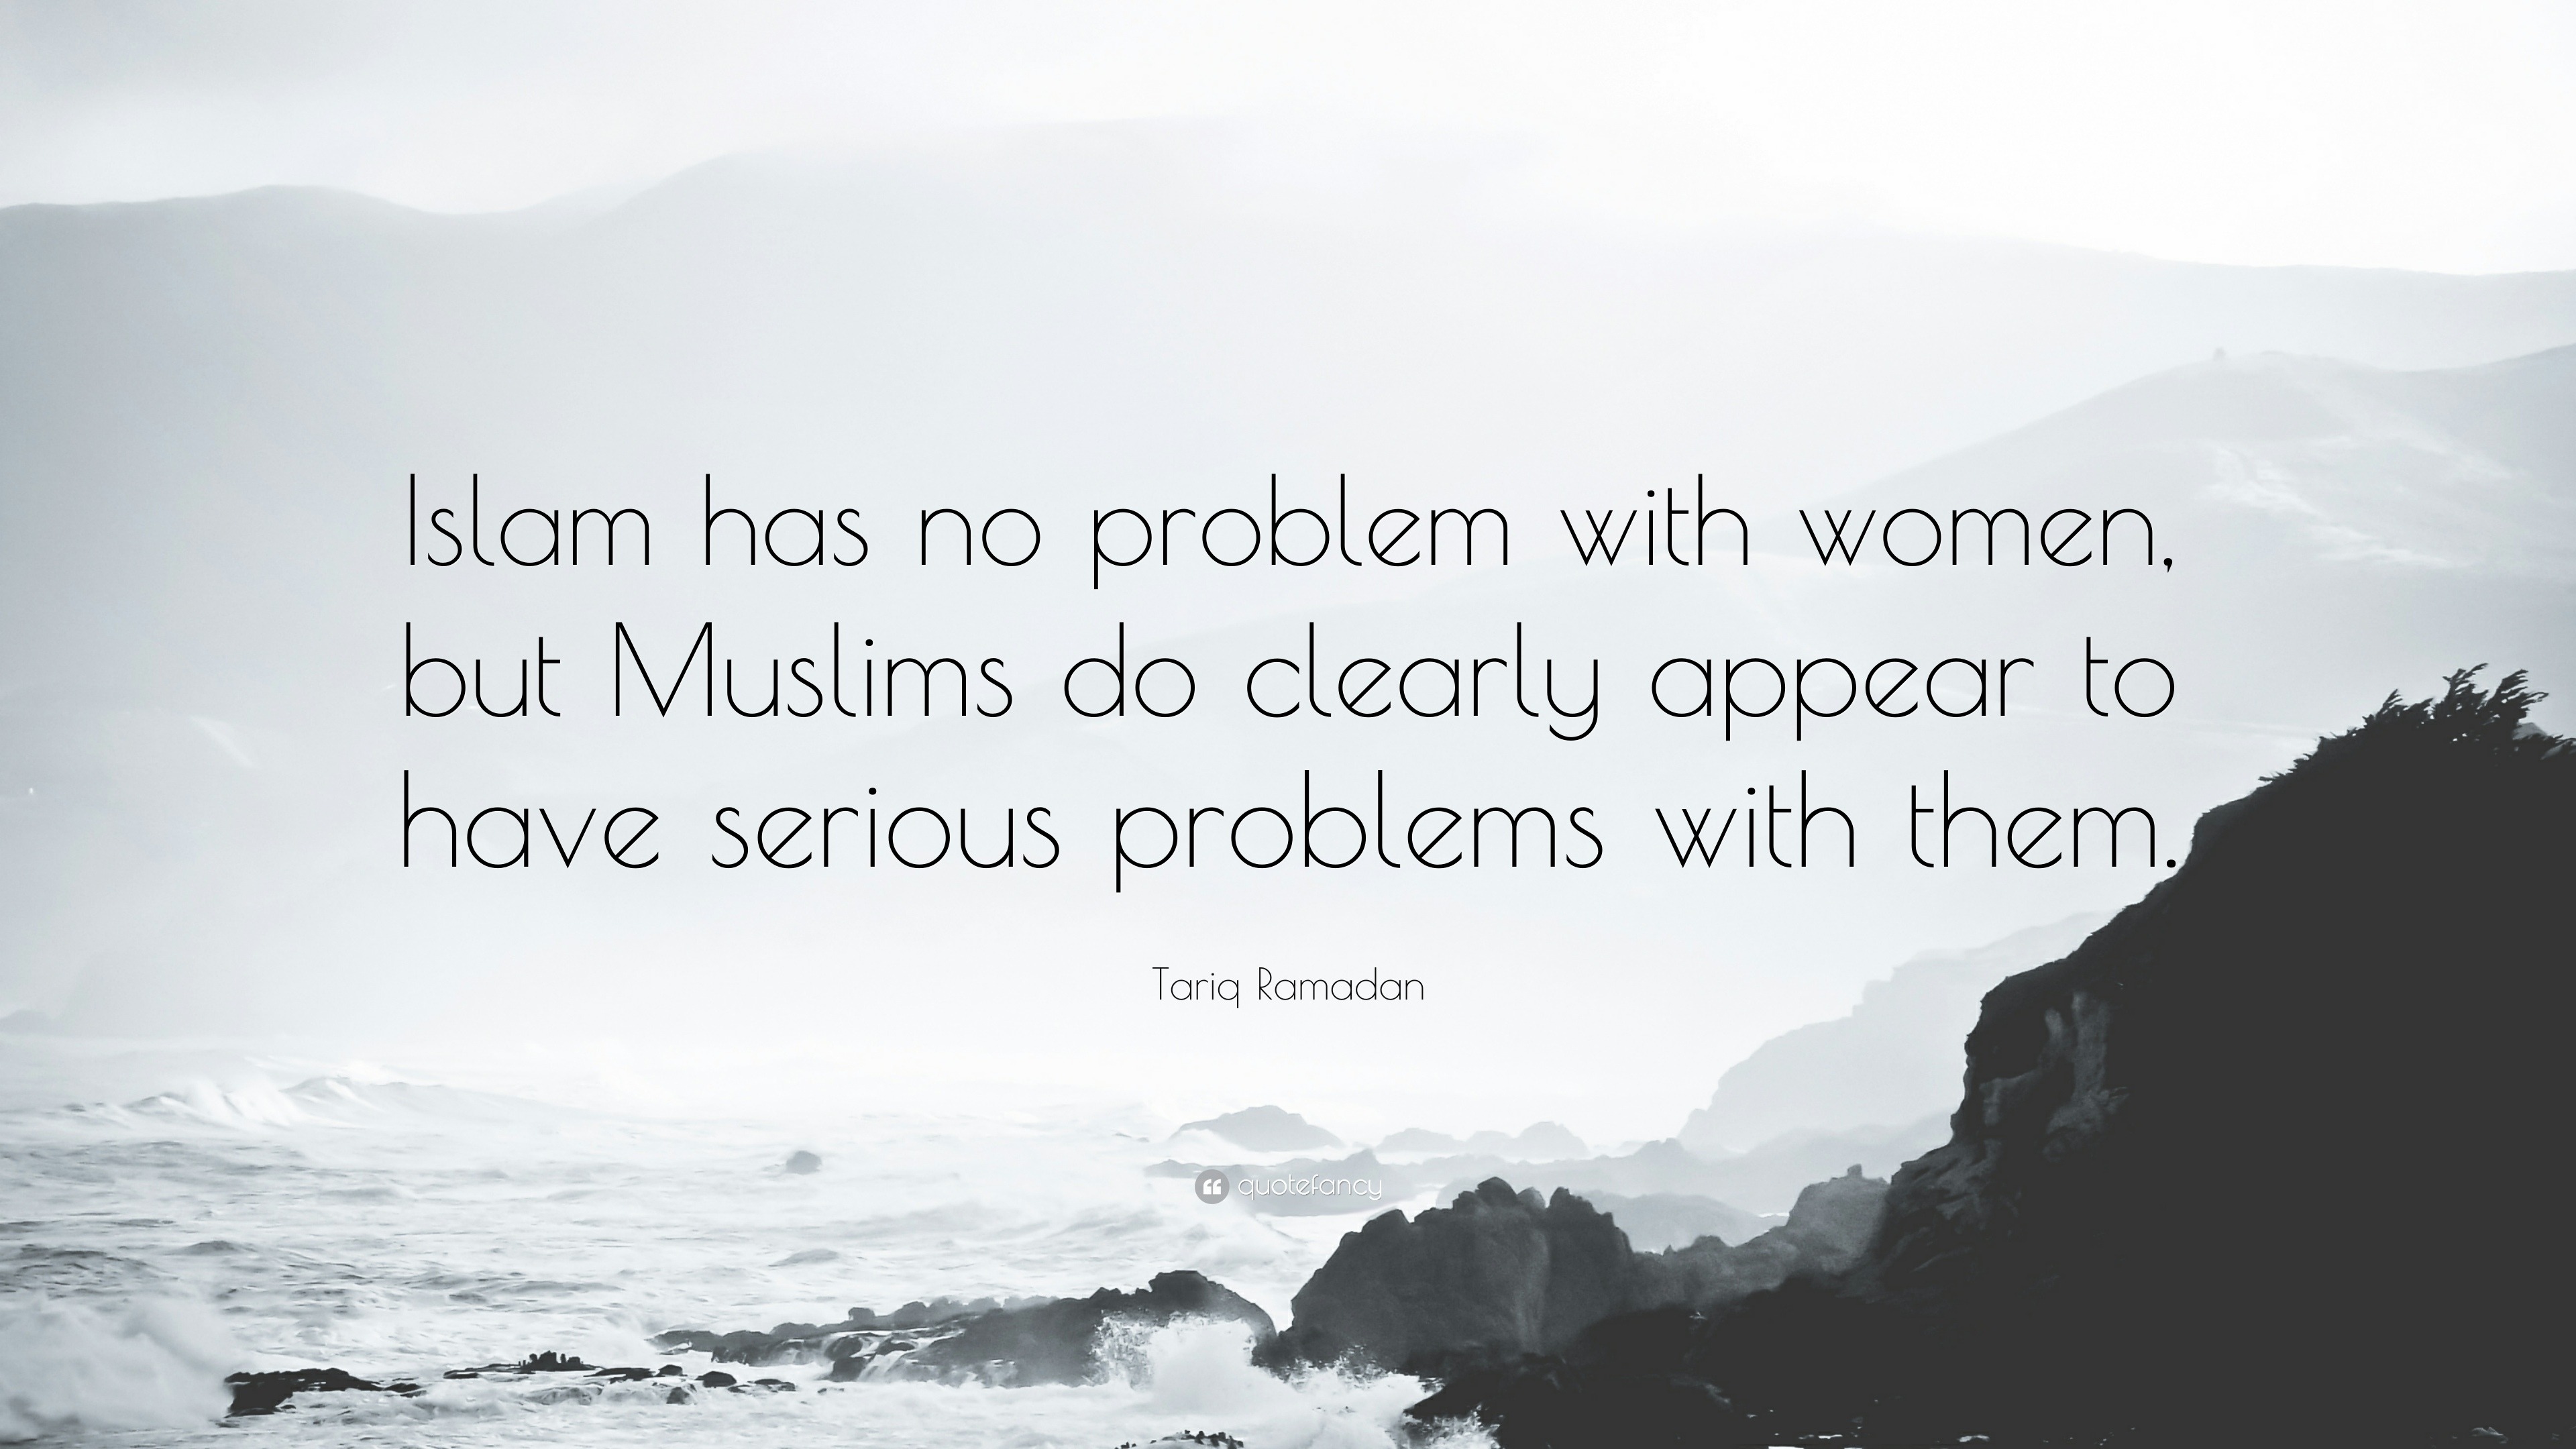 ramadan quotes from hadith